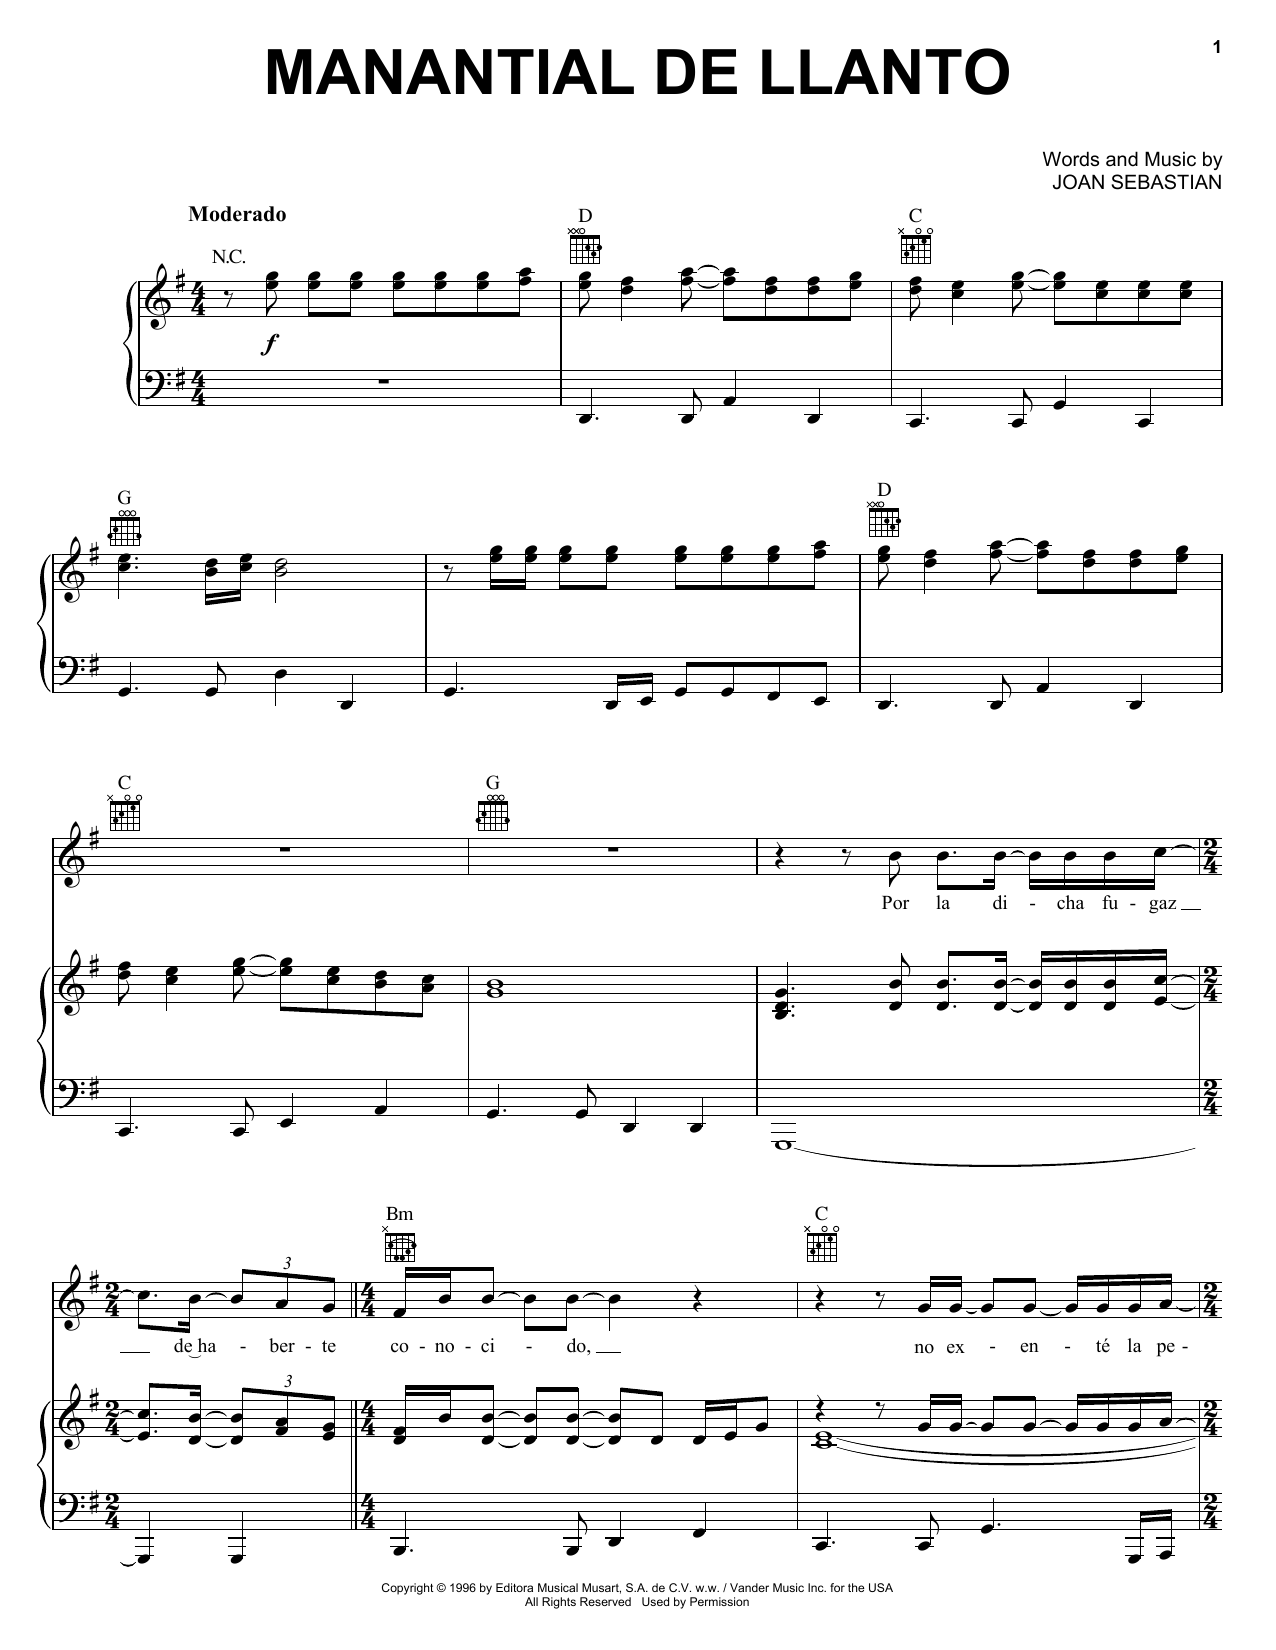 Joan Sebastian Manantial De Llanto Sheet Music Notes & Chords for Piano, Vocal & Guitar (Right-Hand Melody) - Download or Print PDF